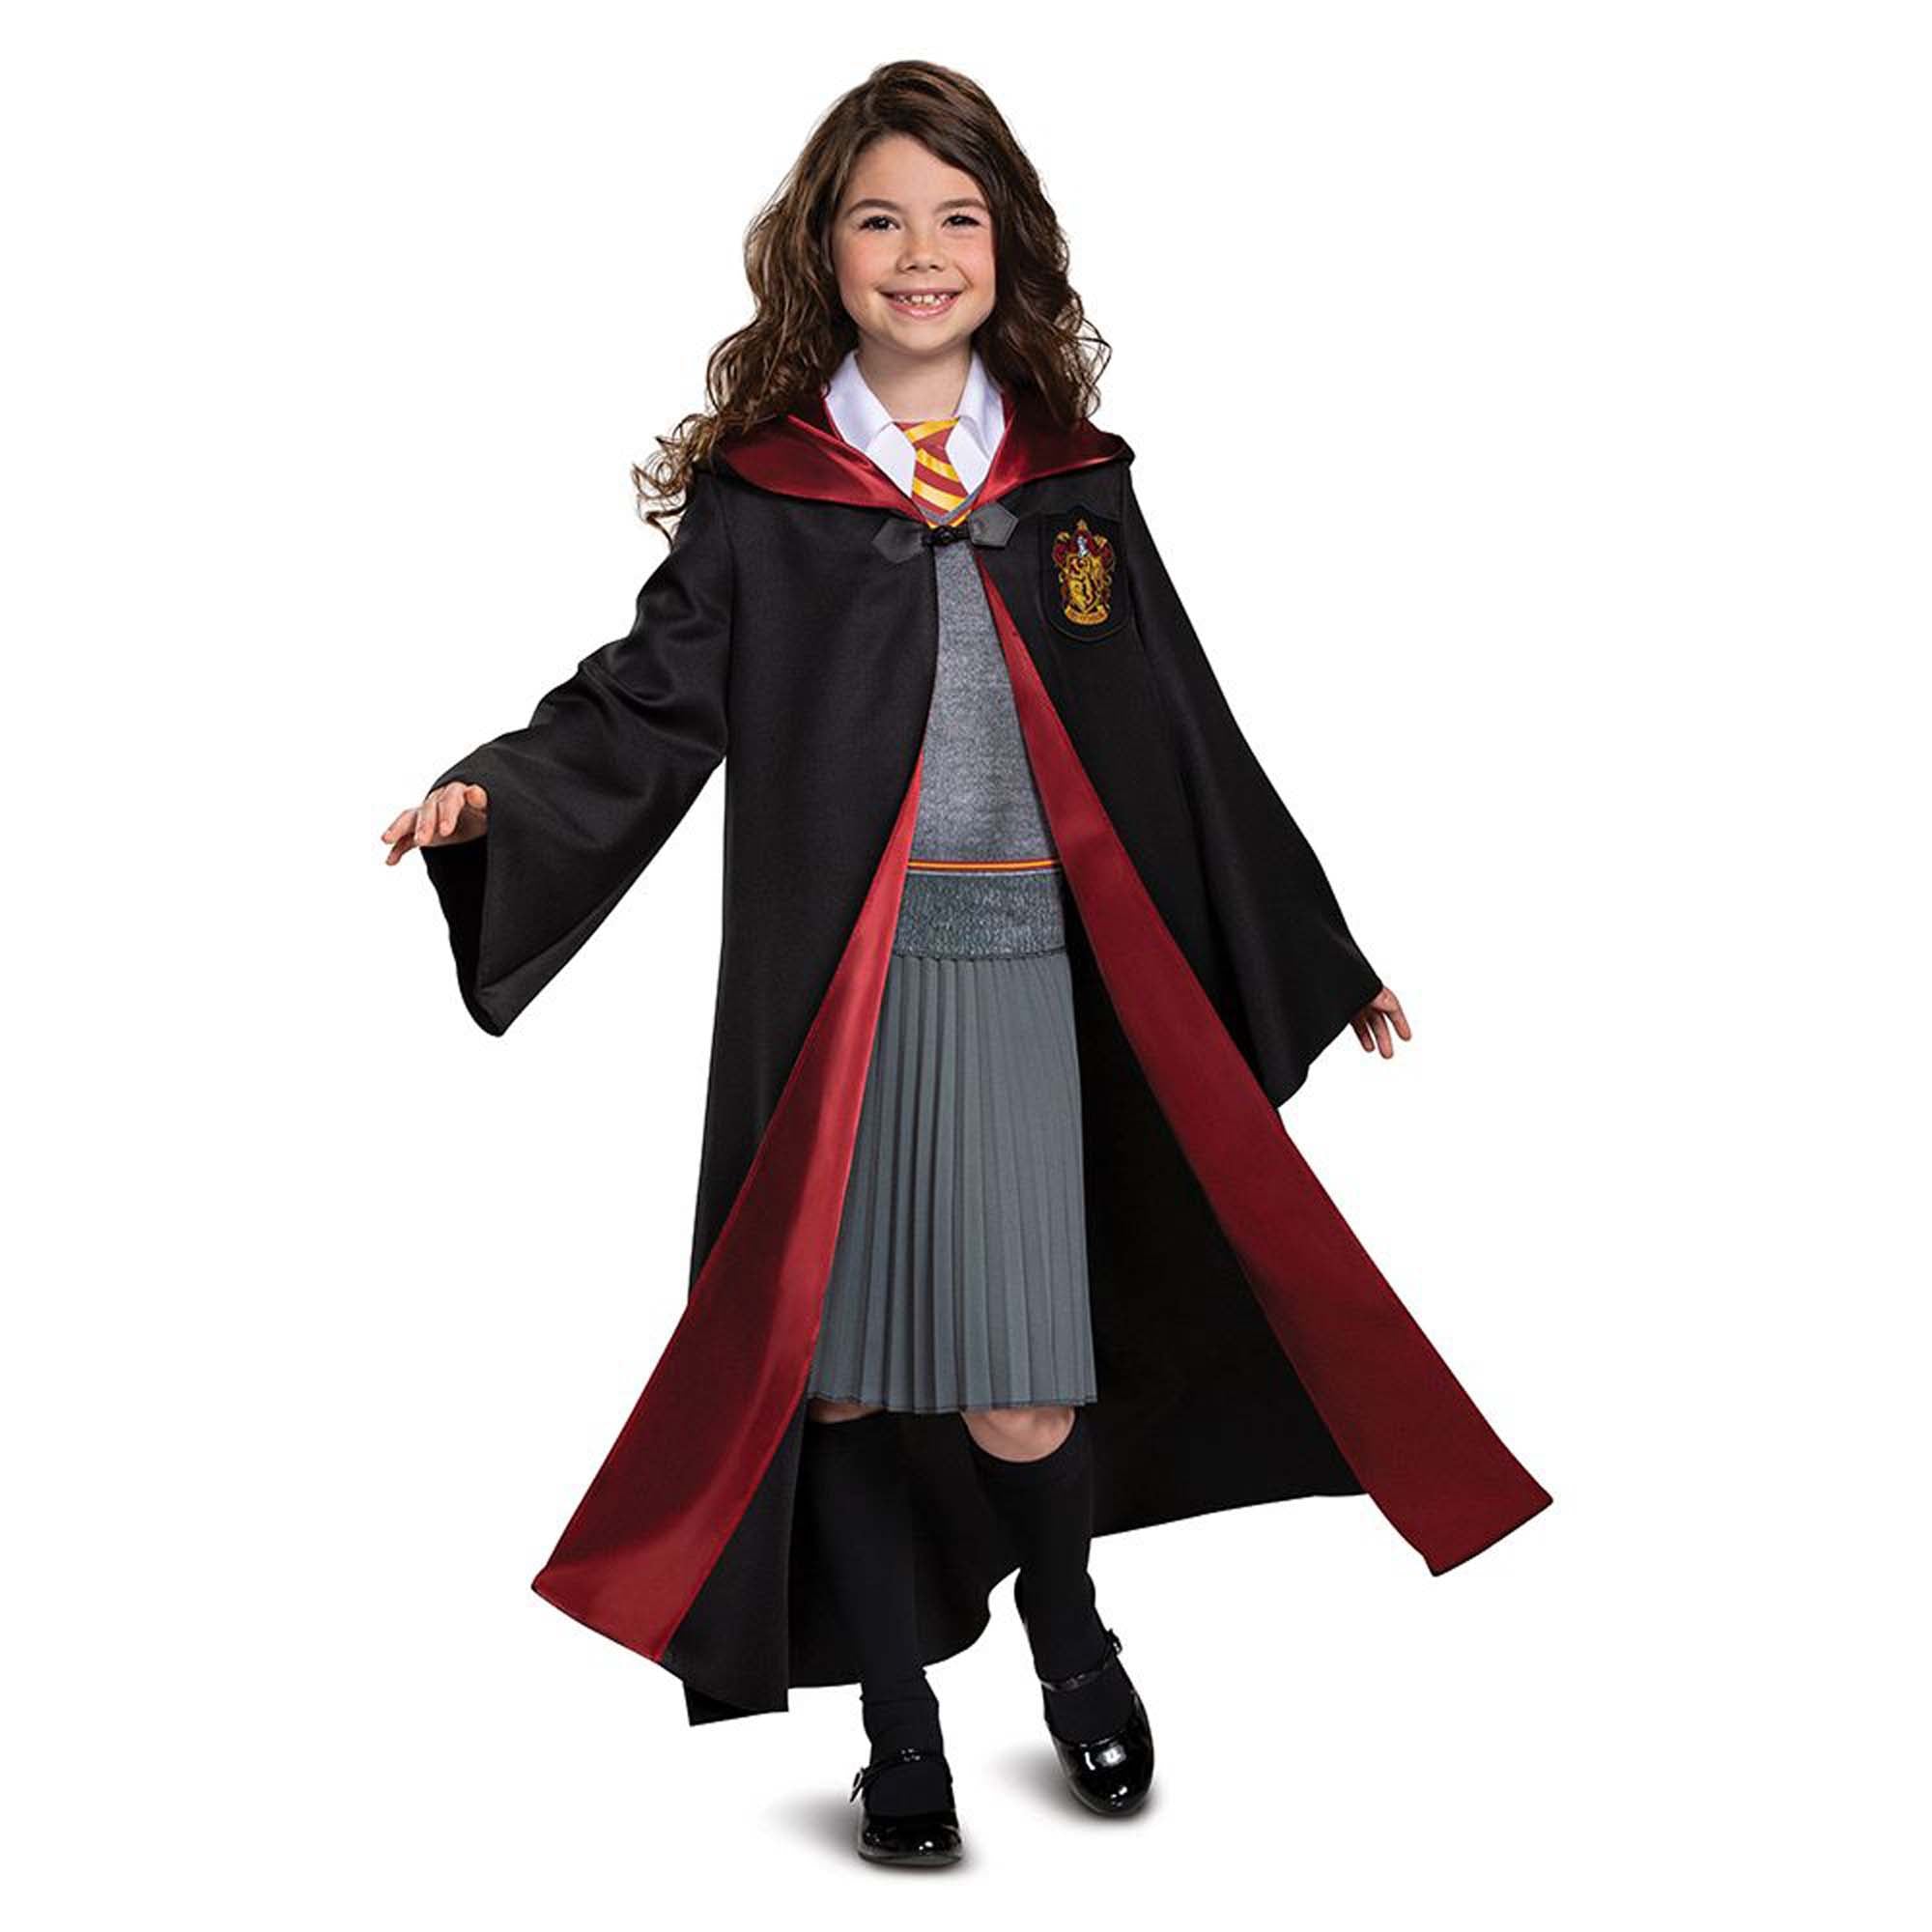 Hermione Granger Deluxe Costume for Kids, Harry Potter